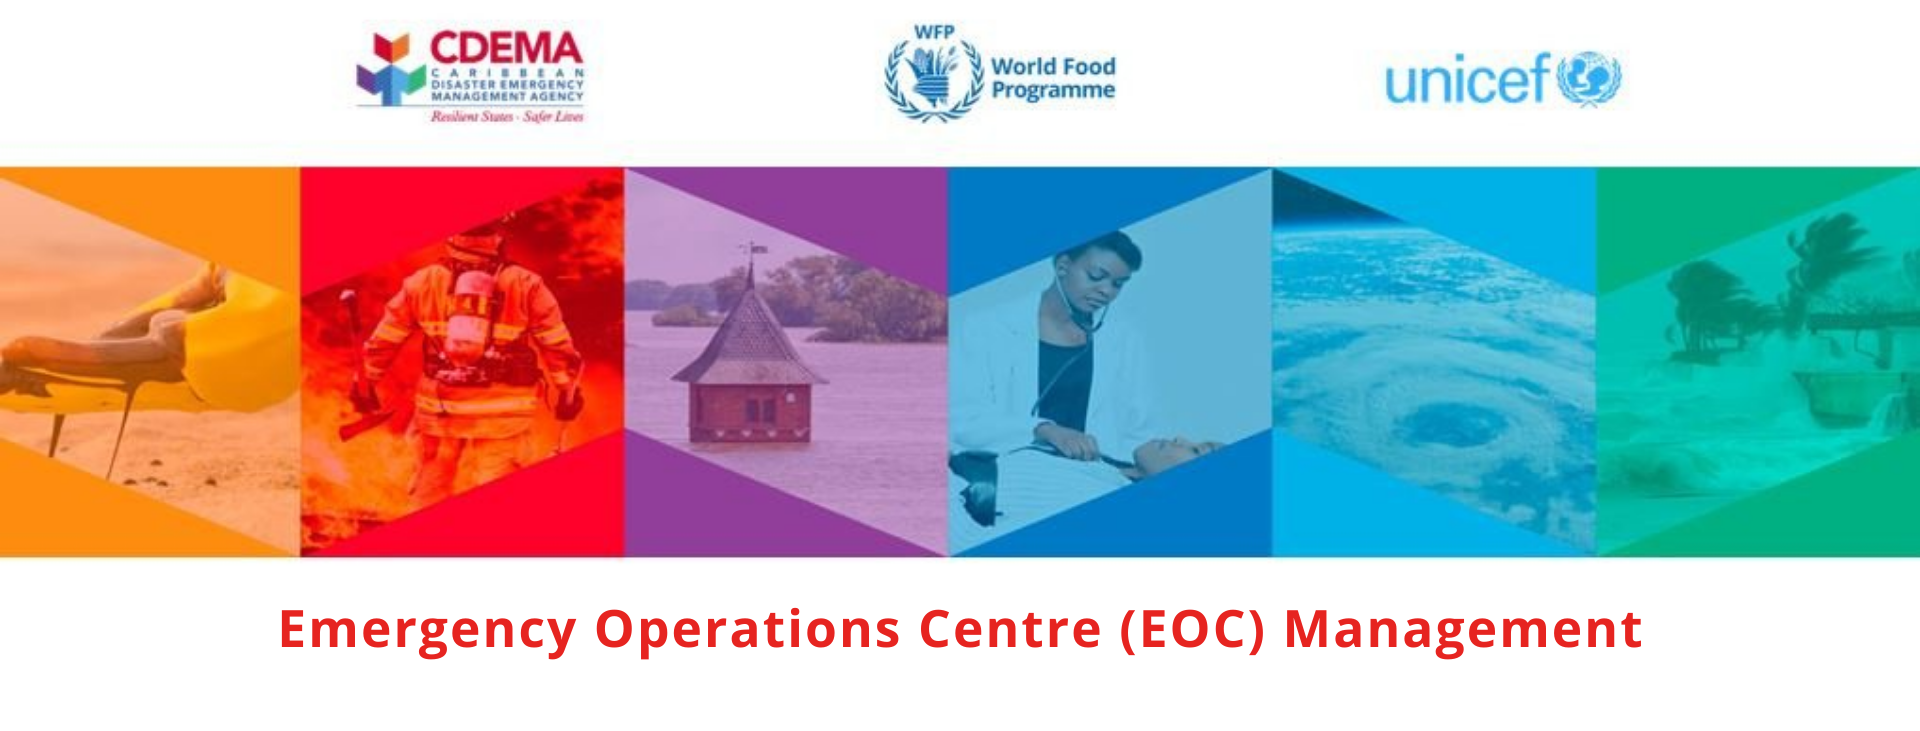 Emergency Operations Centre (EOC) Management